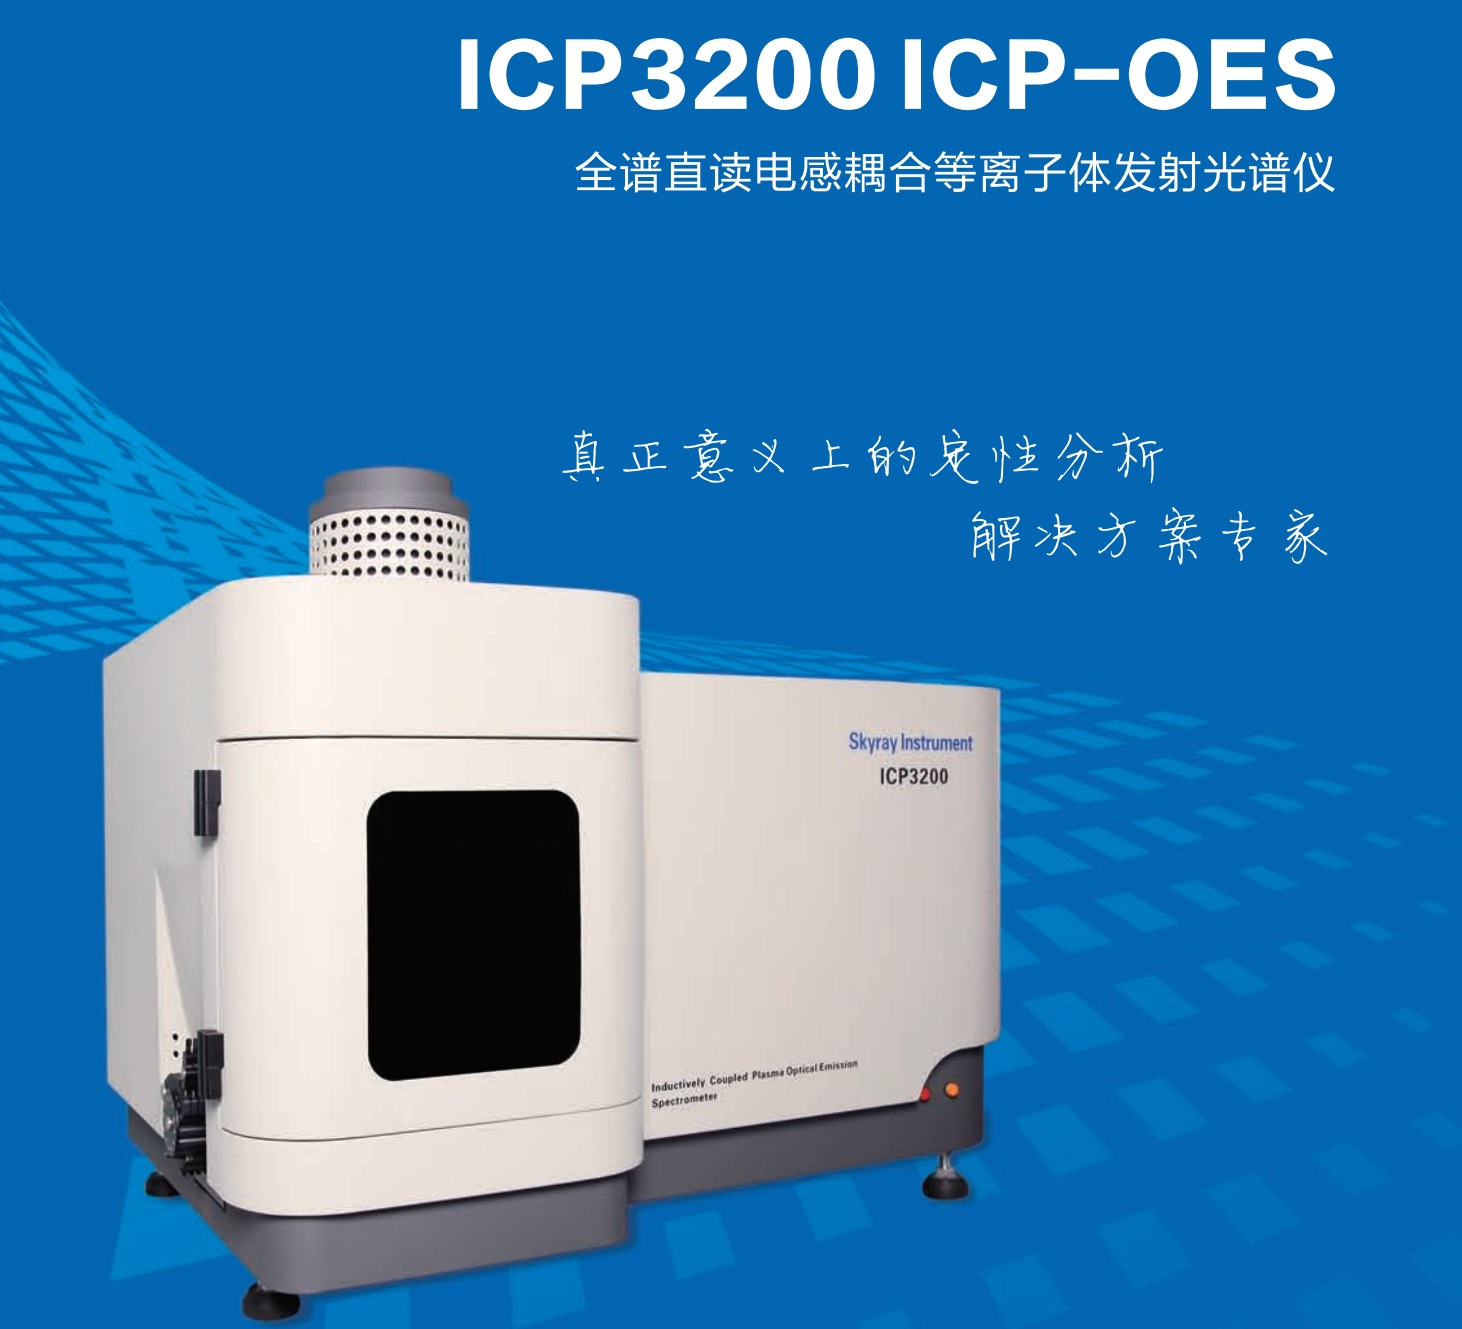 Jiangsu Skyray Instrument Co., Ltd.-ICP 3200 ICP-OES